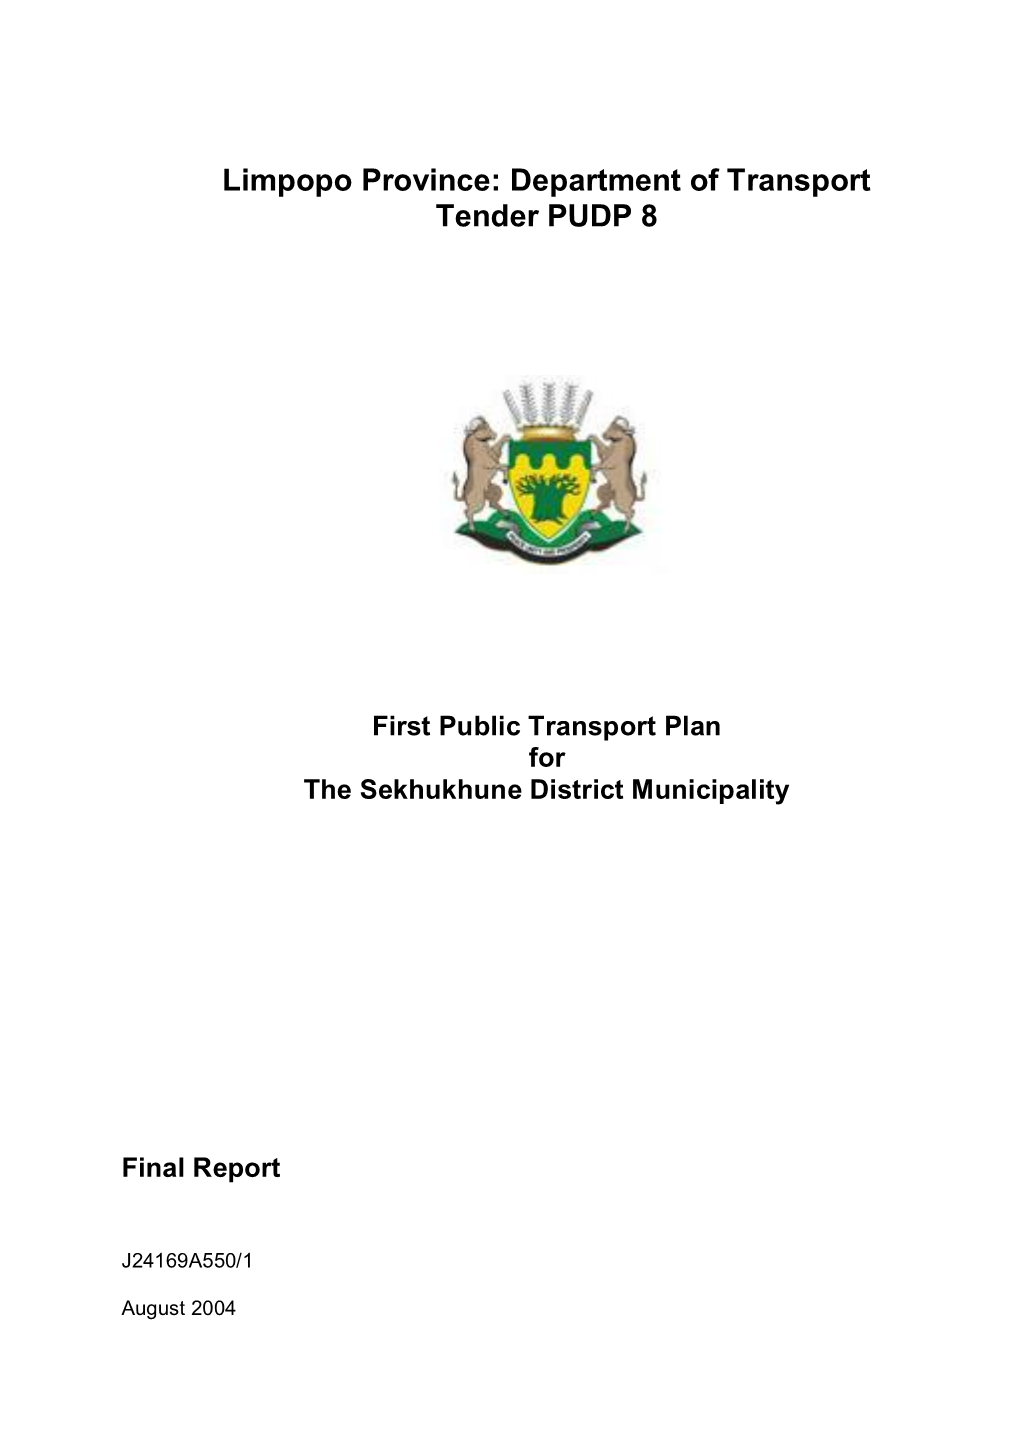 Limpopo Province: Department of Transport Tender PUDP 8